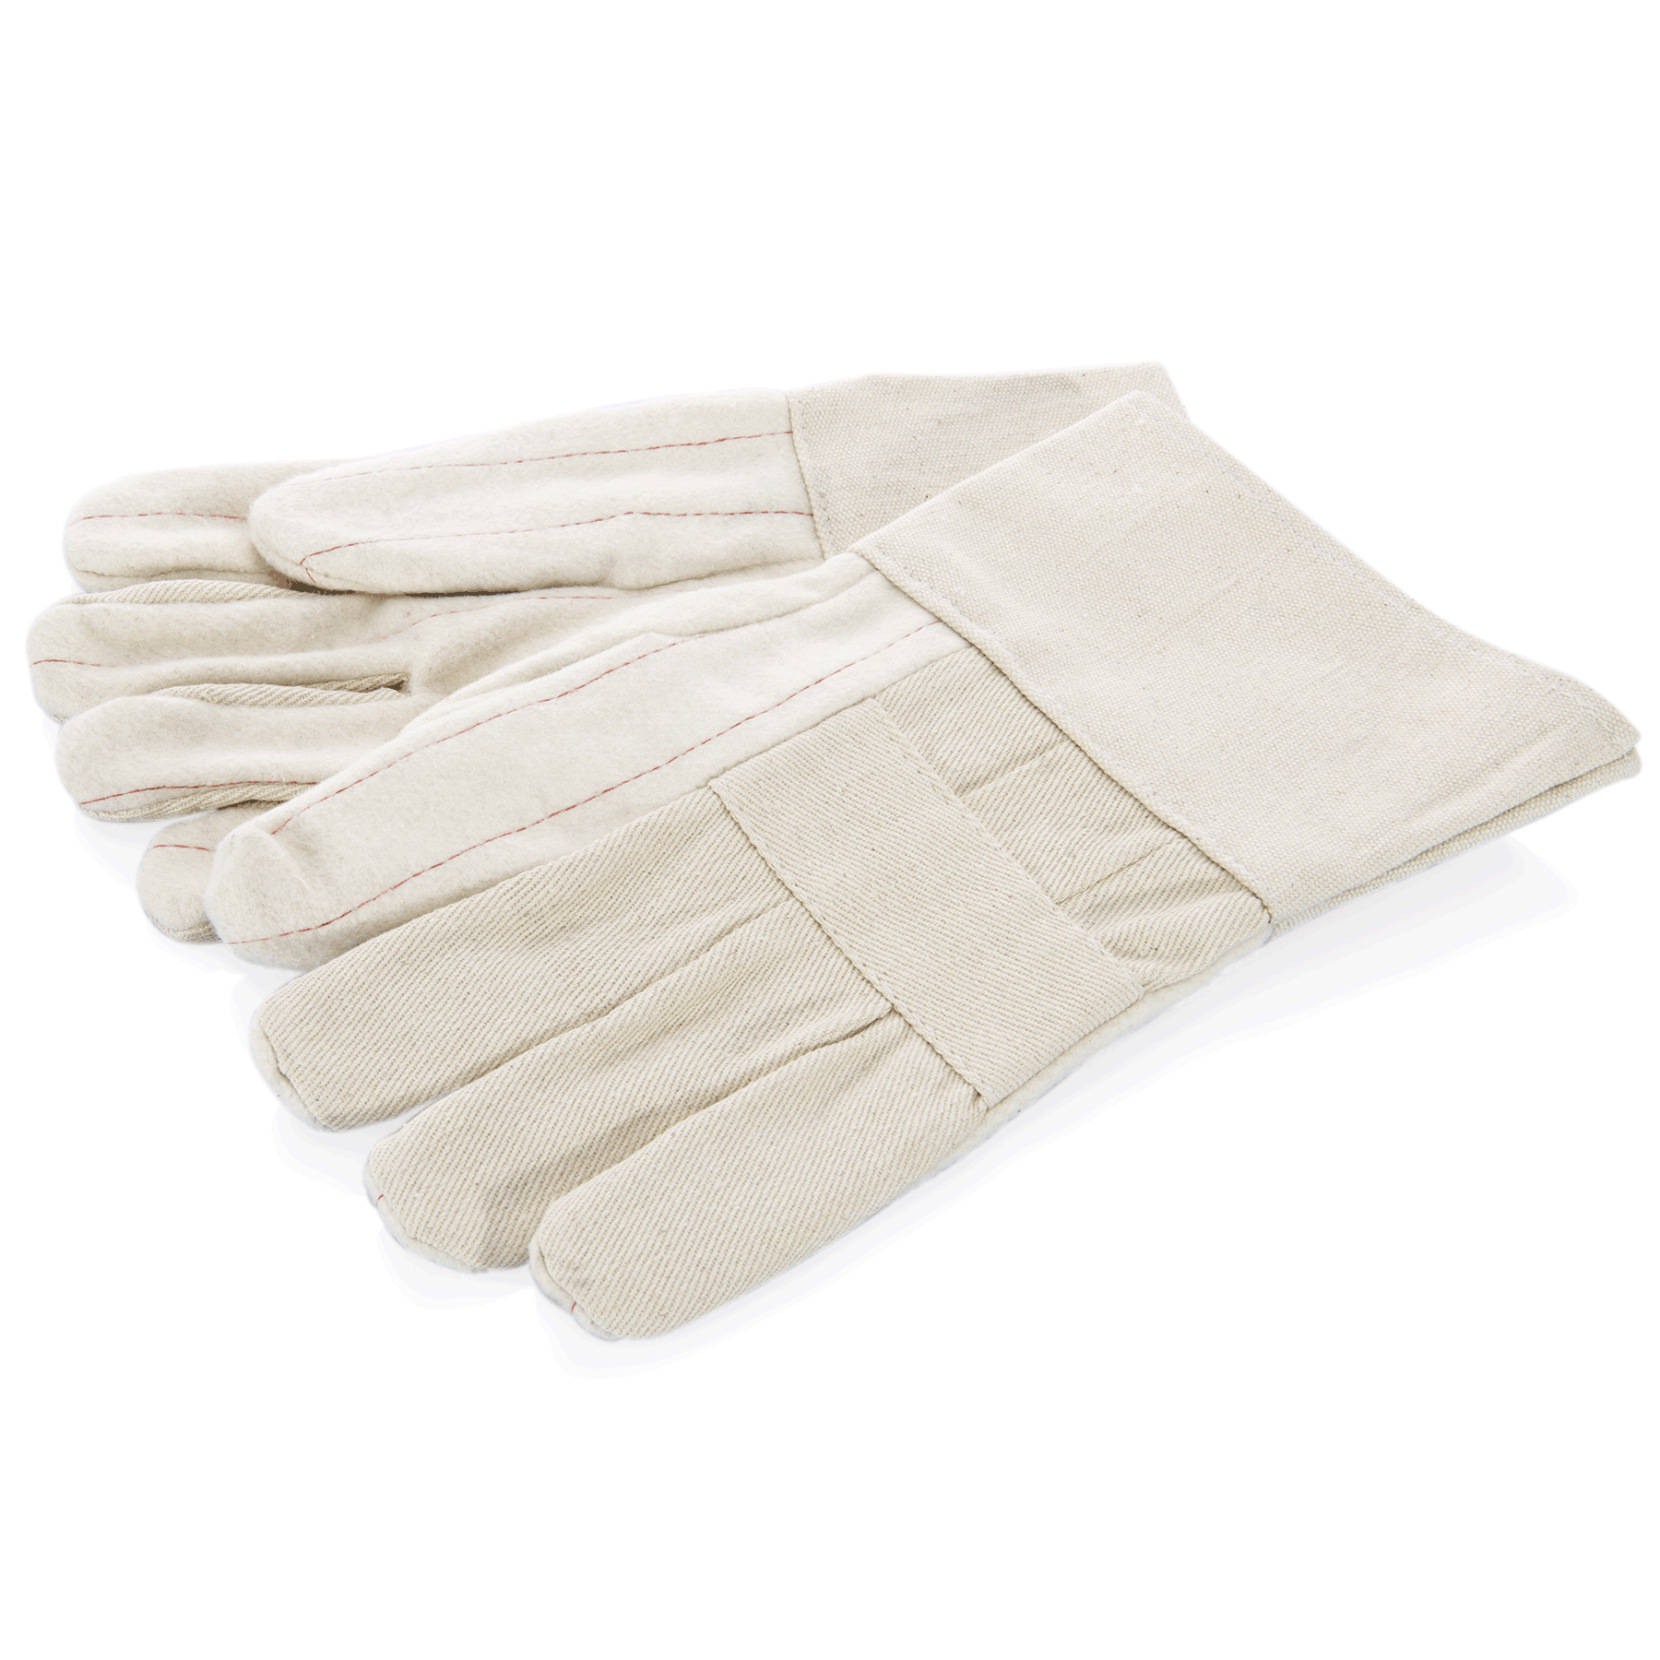 Hitzefingerhandschuhe, 2-teilig, 30 cm, Baumwolle